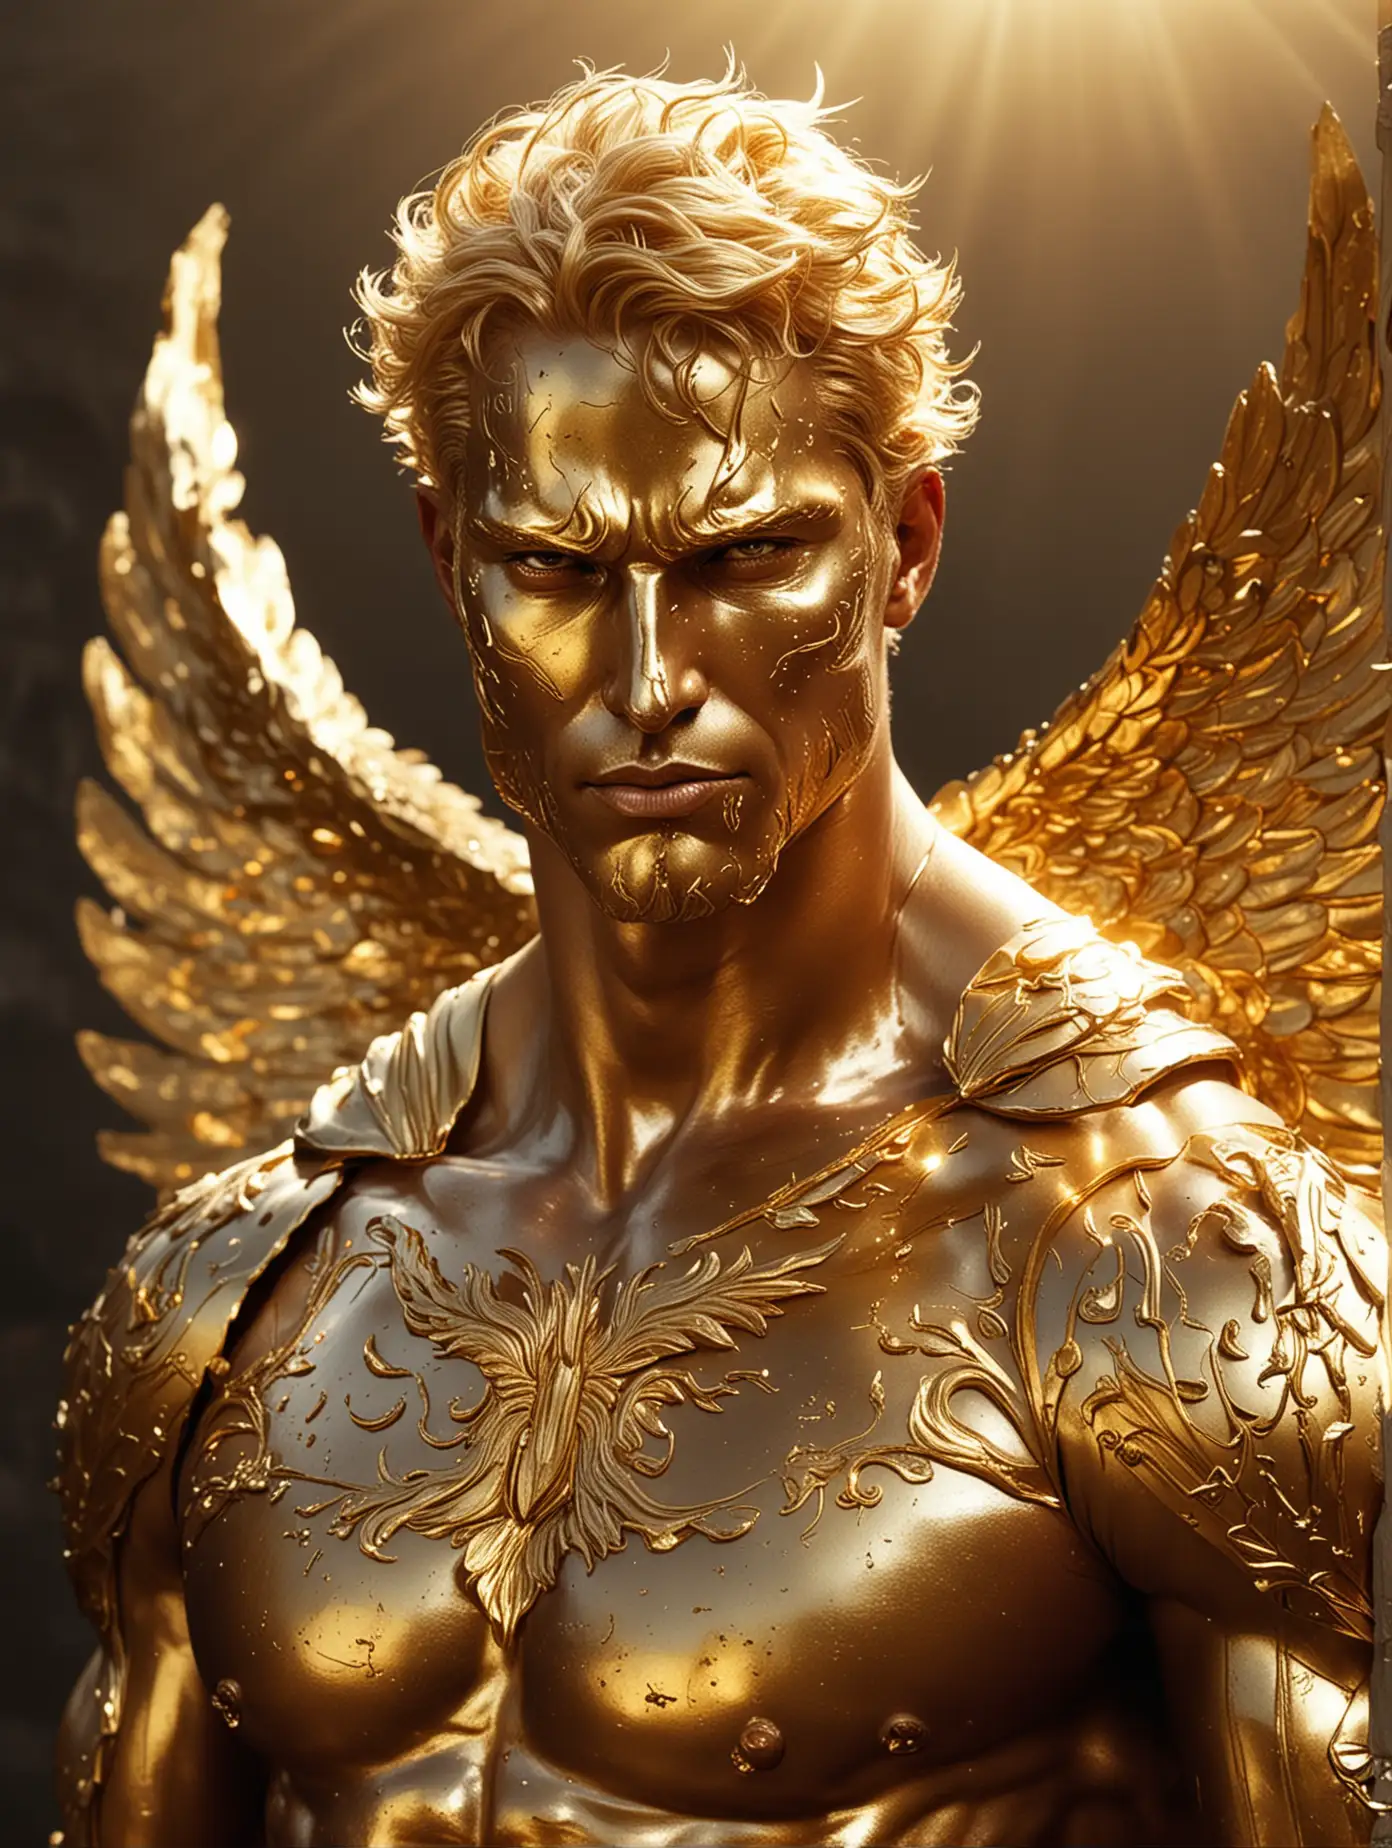 Golden Sun God in Radiant Armor with Solar Rays